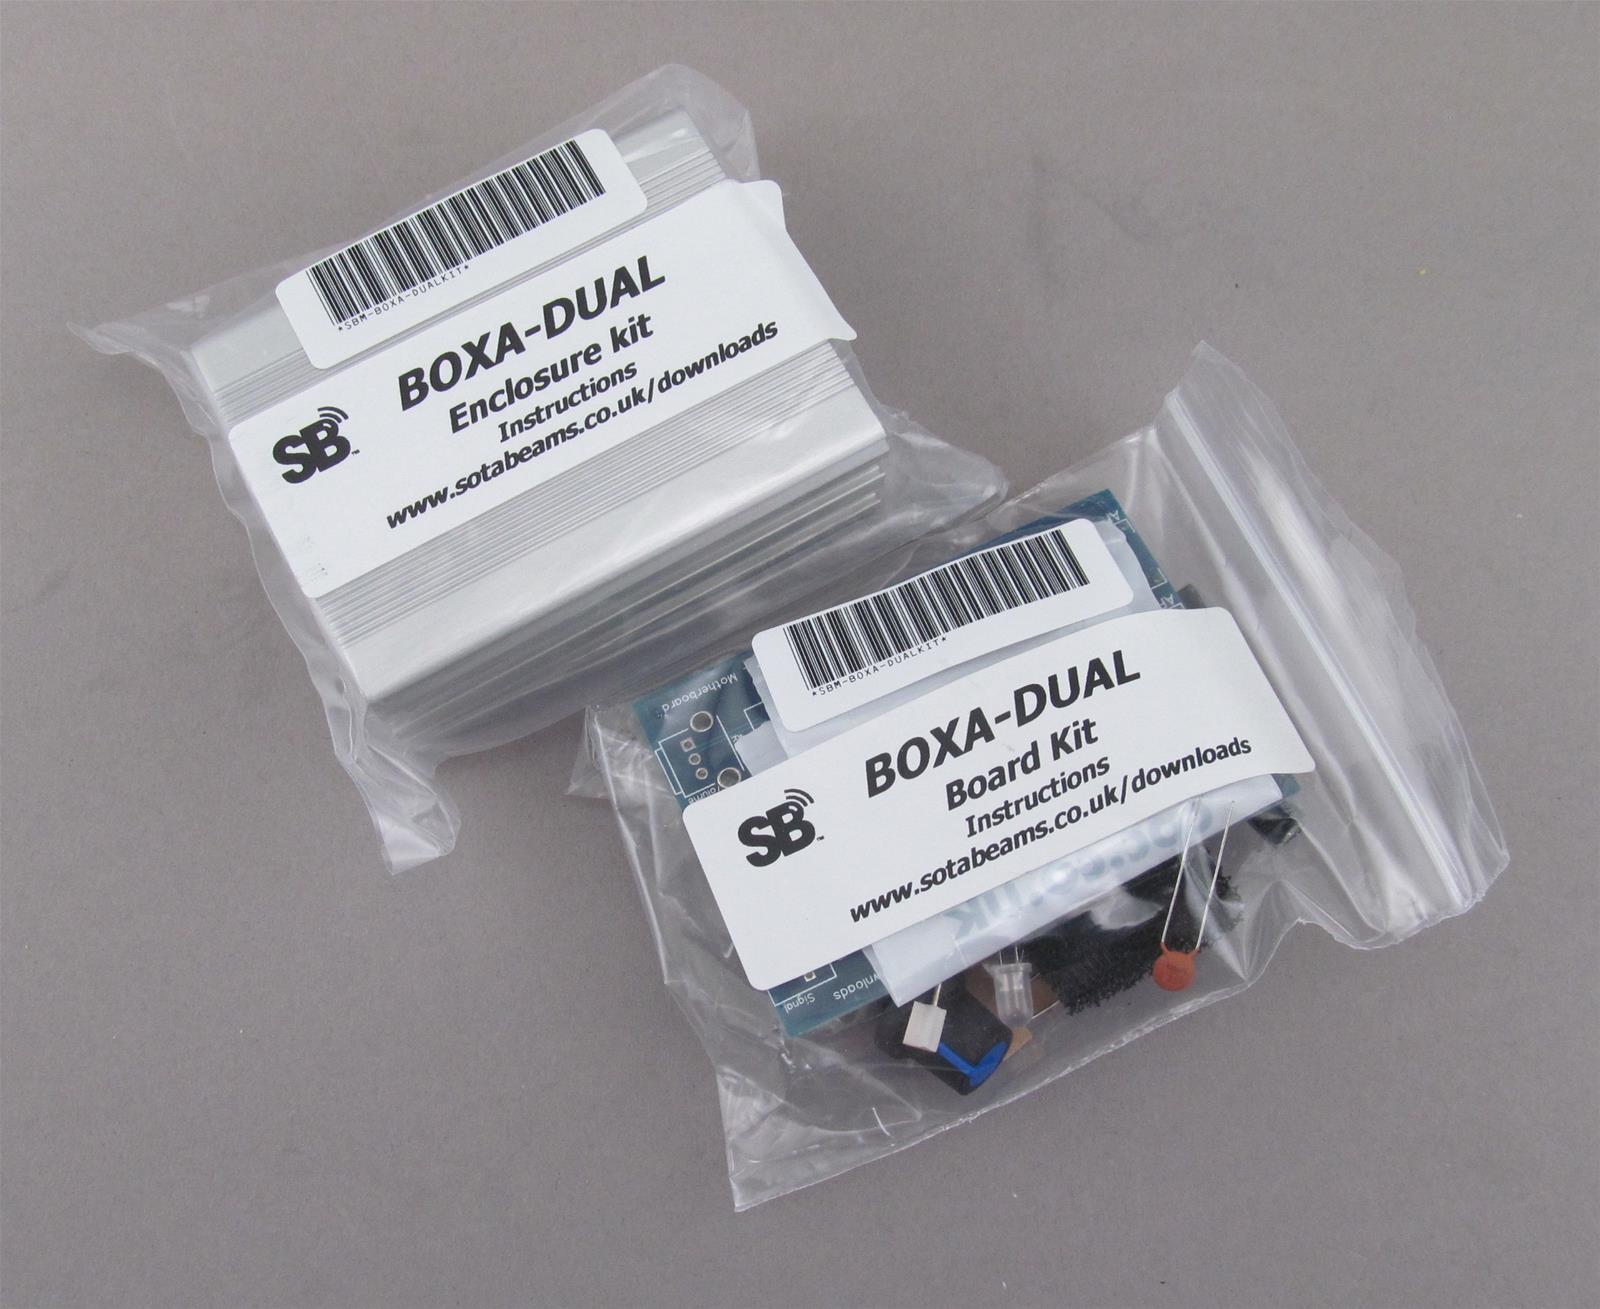 Sotabeams BOXA-DUALKIT SOTAbeams BOXA-DUAL Amplifier Kits | DX Engineering